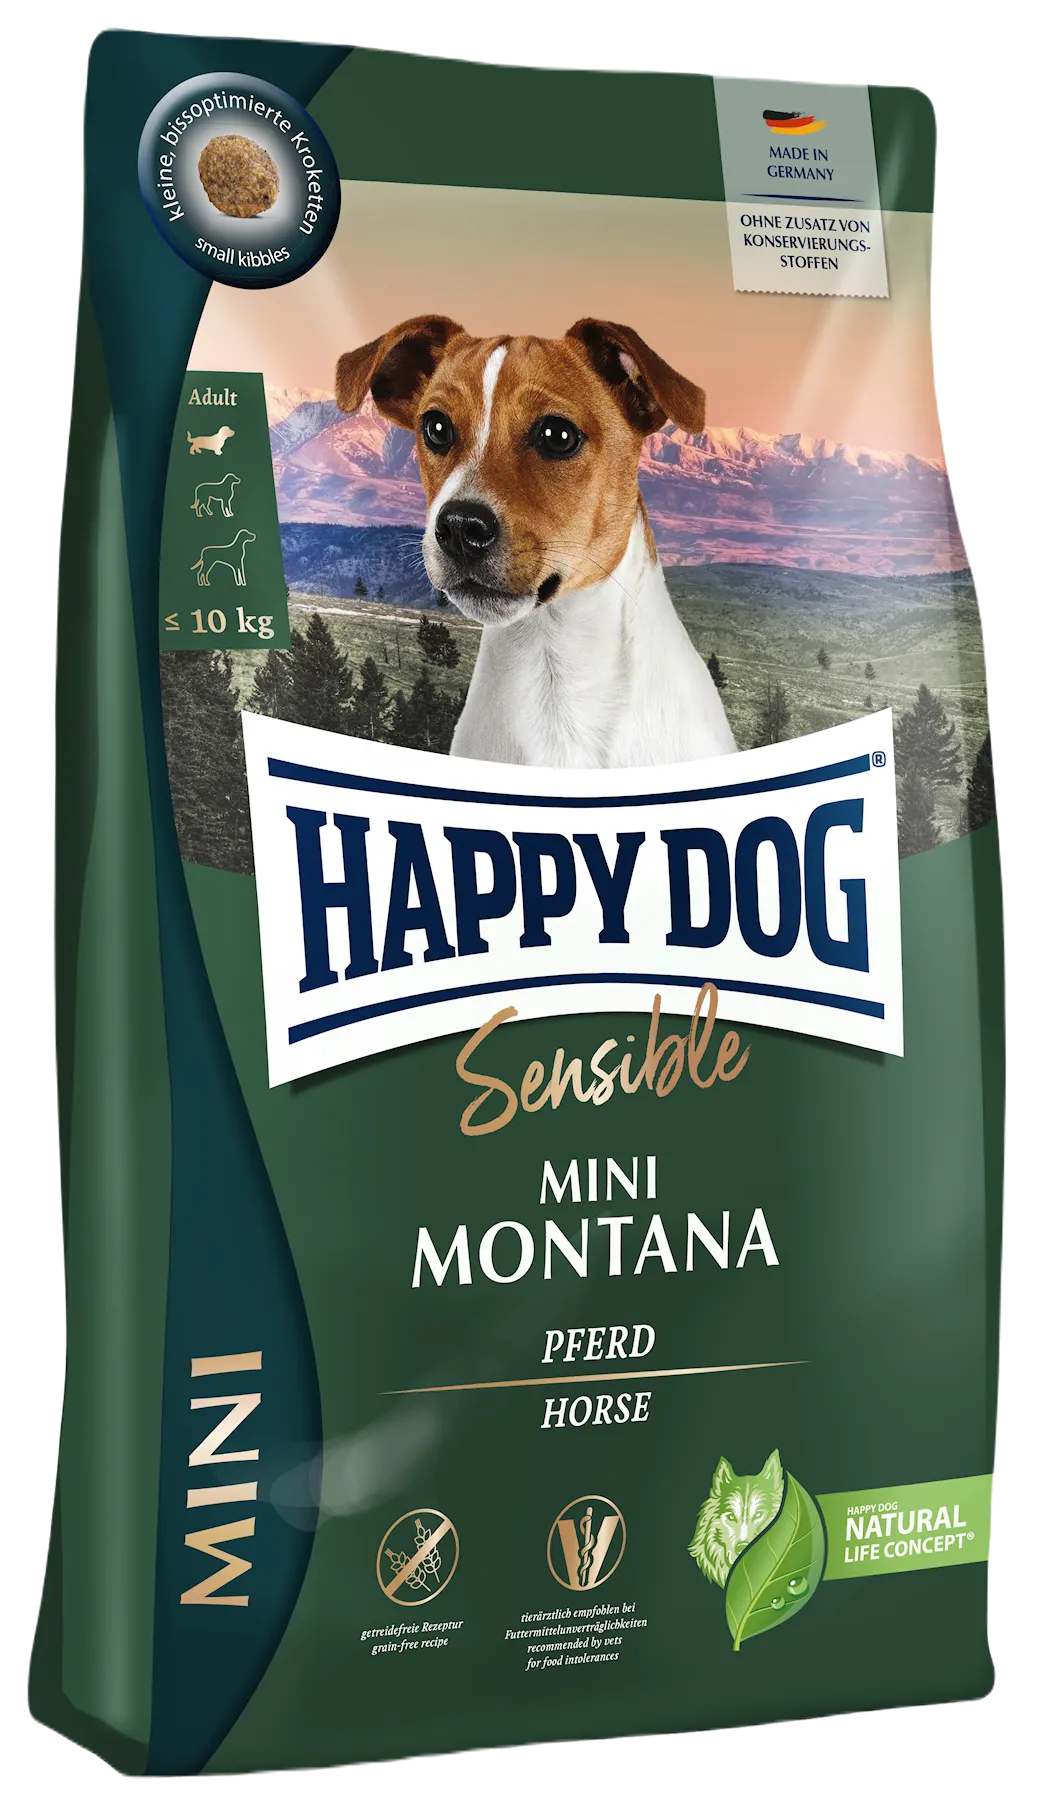 Dry Food Supreme Sensible Montana Mini GlutenFree Horse & Potato